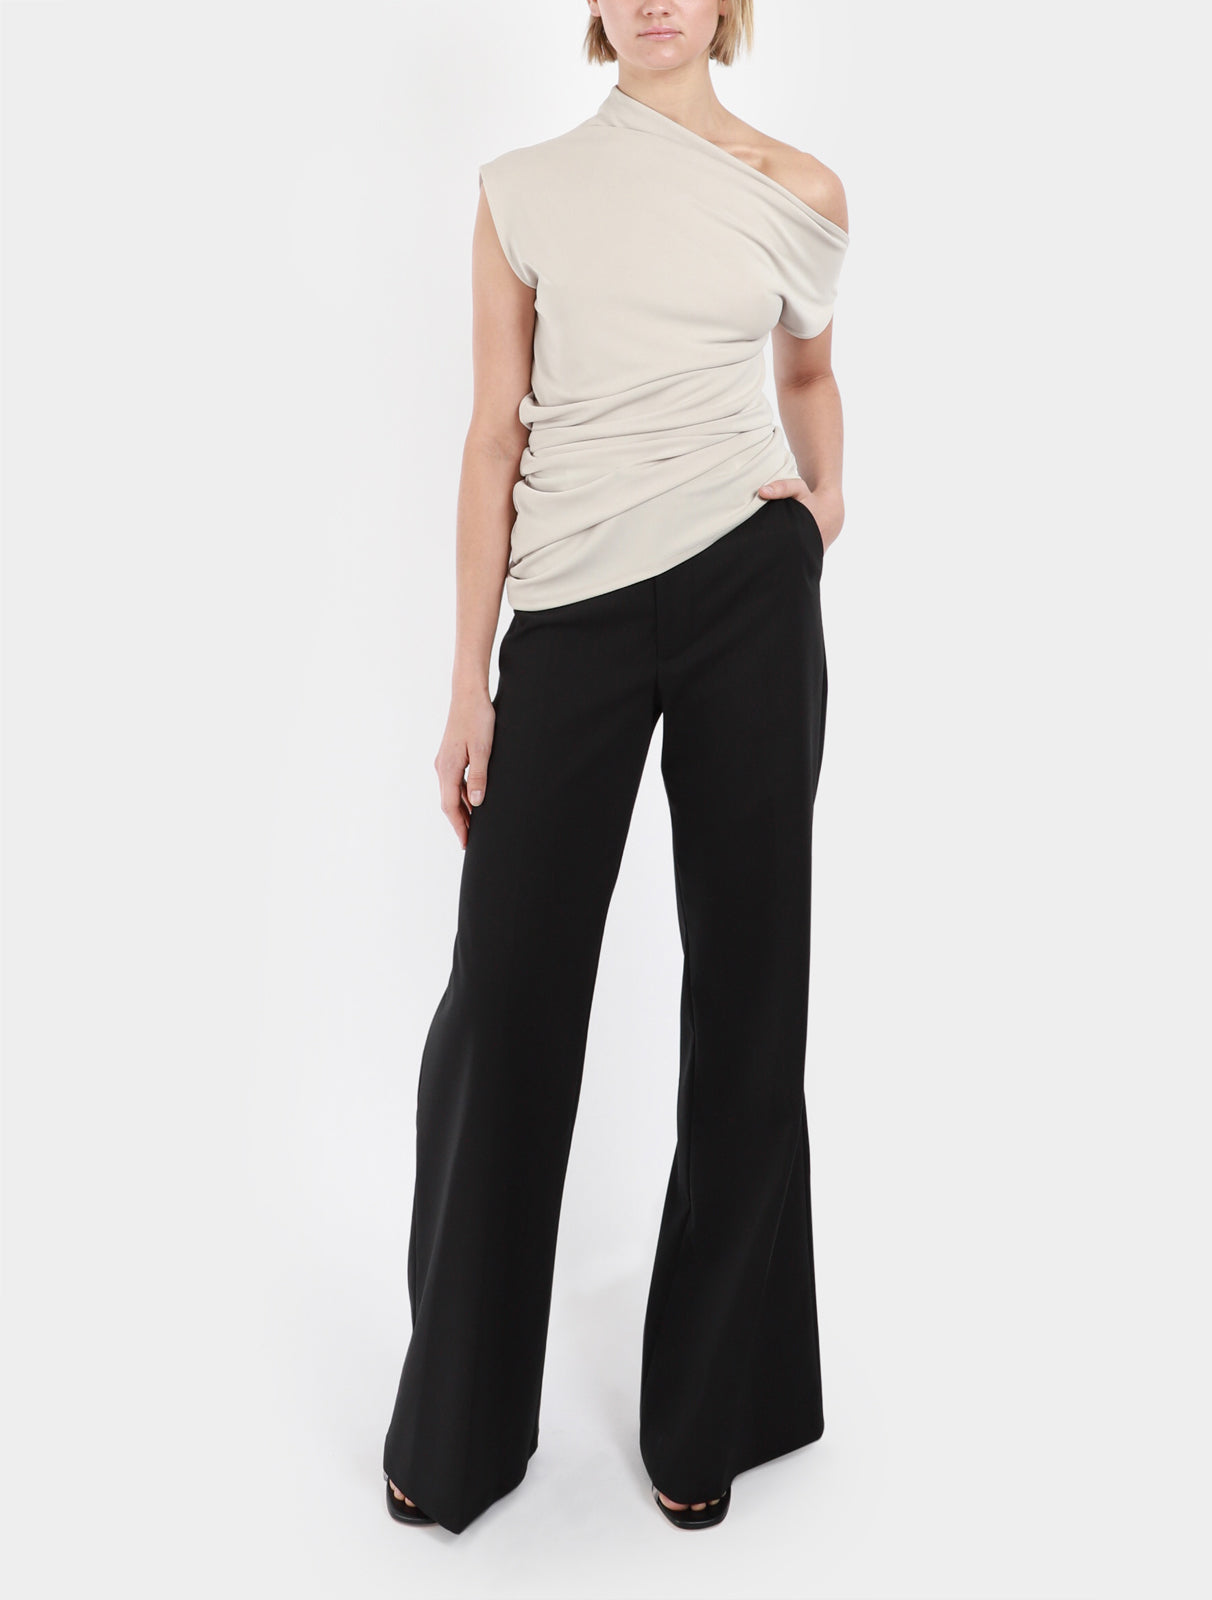 Shop Kallmeyer Athena Flare Pants Online | Camargue Fashion Australia